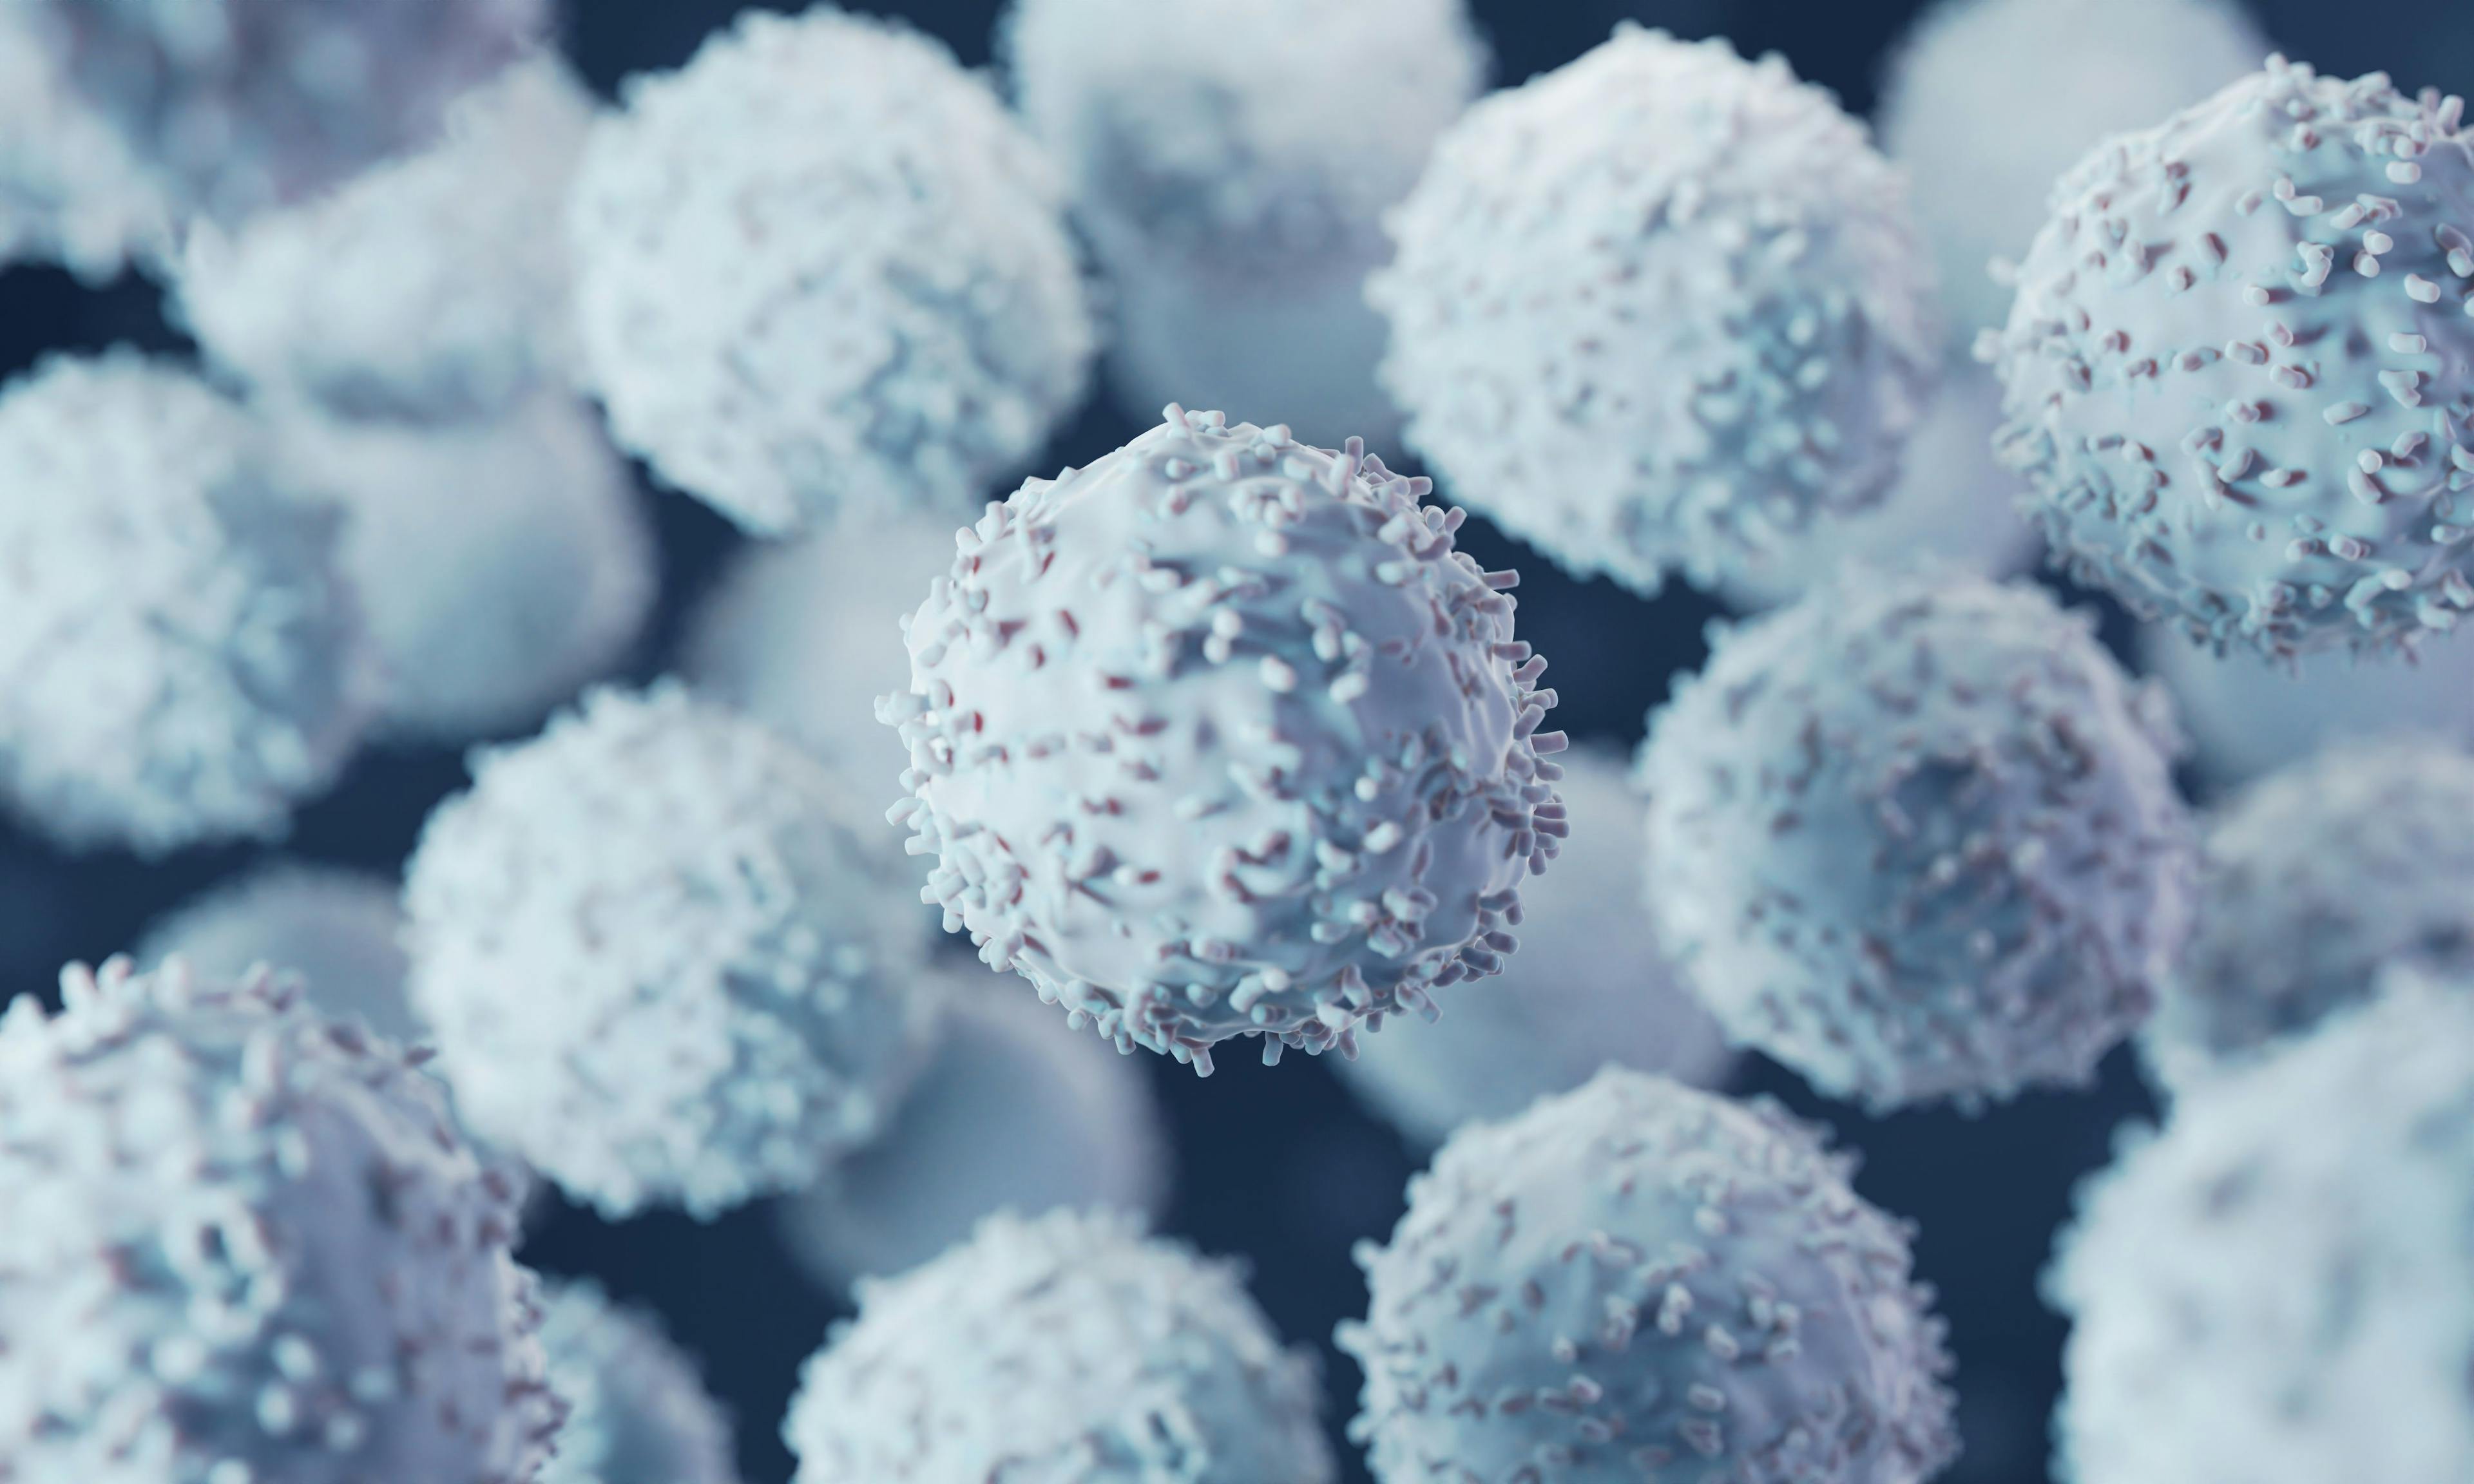 Lymphocytes such as T-cells | Image Credit: © Artur - stock.adobe.com